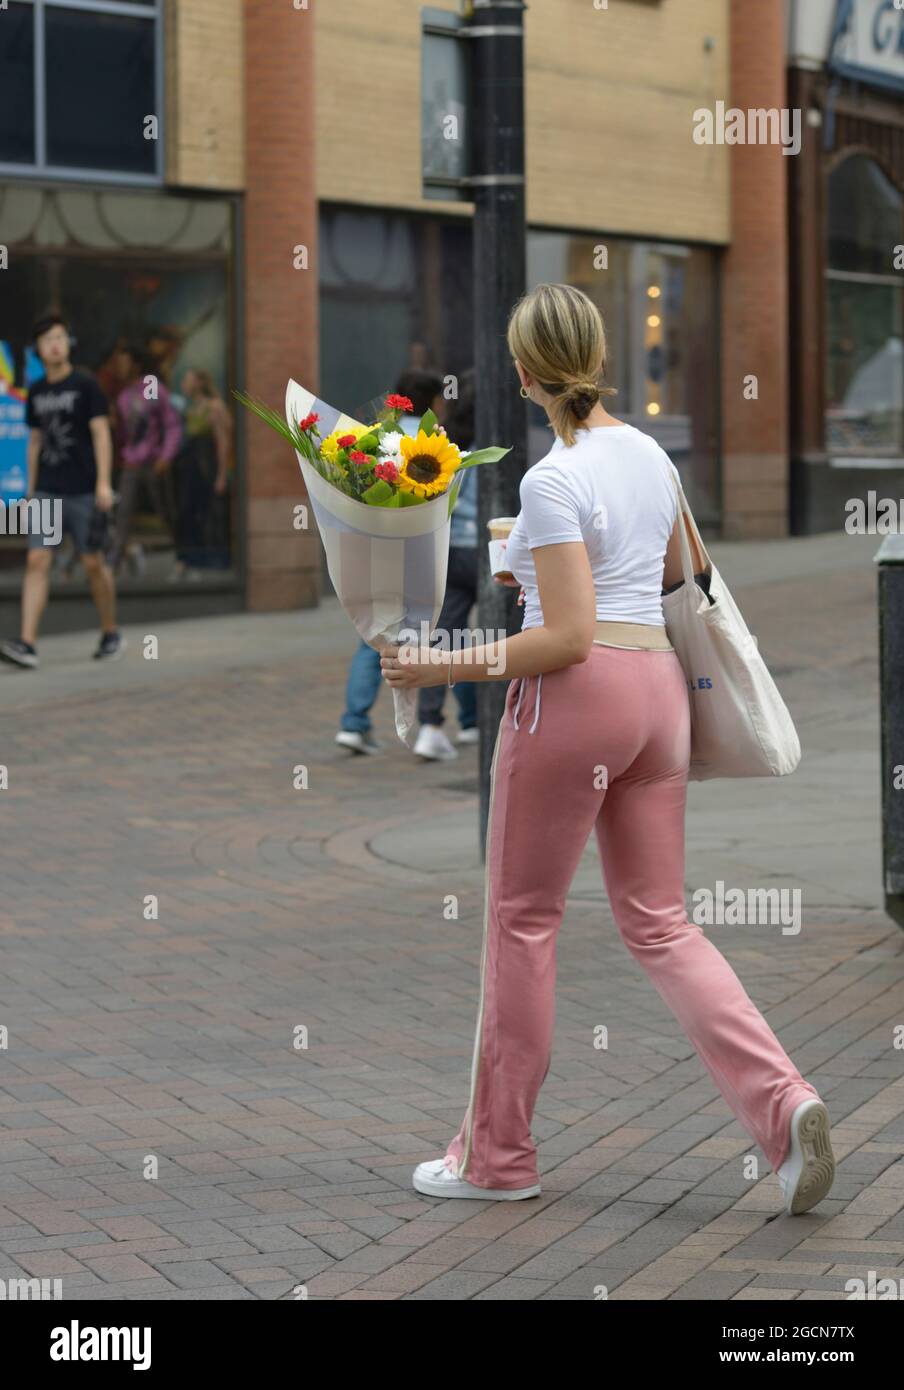 Jeune femme avec fleurs, haut blanc et pantalon rose Photo Stock - Alamy